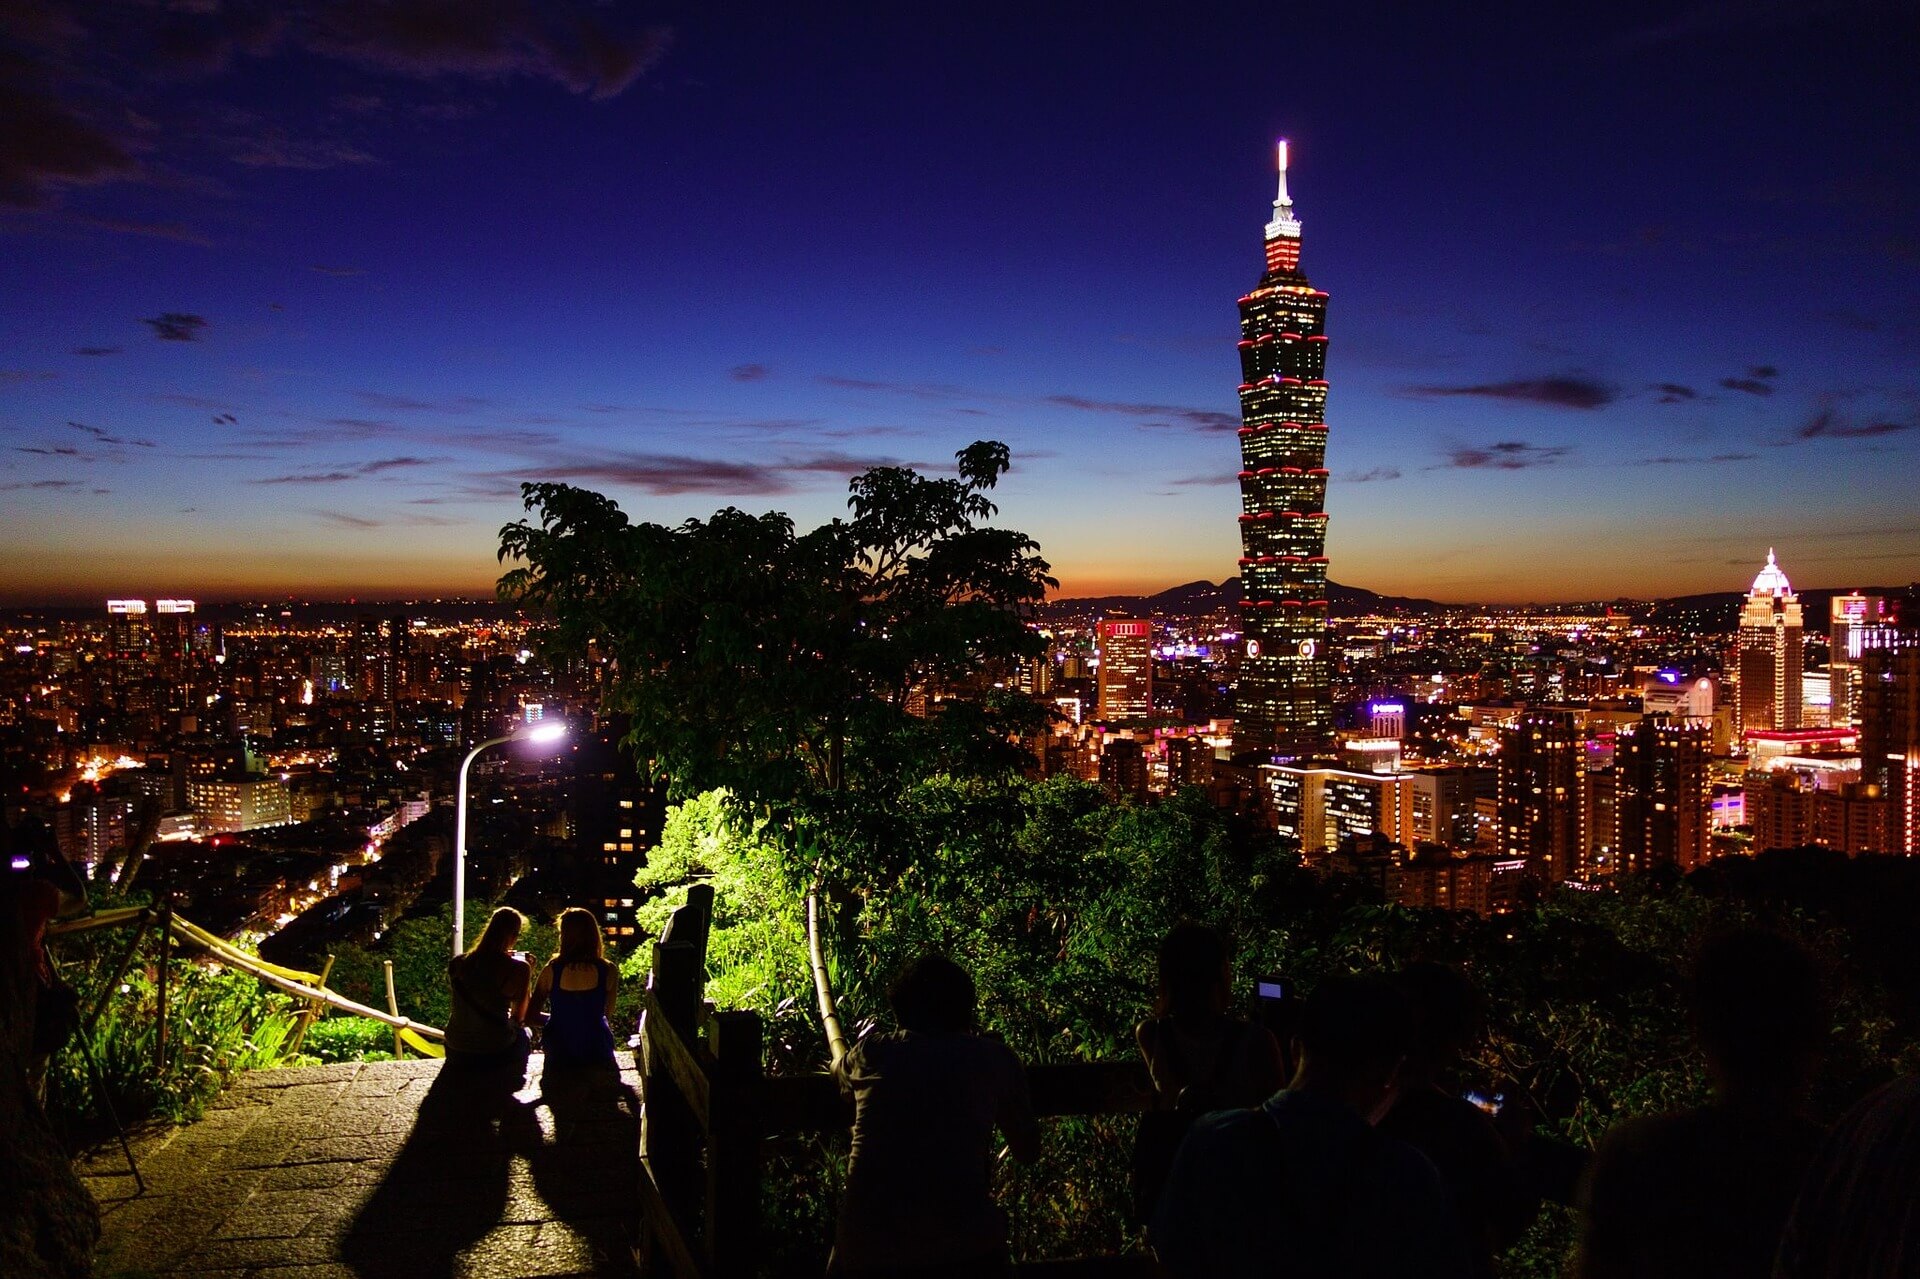 De Taiwanese hoofdstad Taipei met de 508-meter hoge Taipei 101-wolkenkrabber. © Pixabay